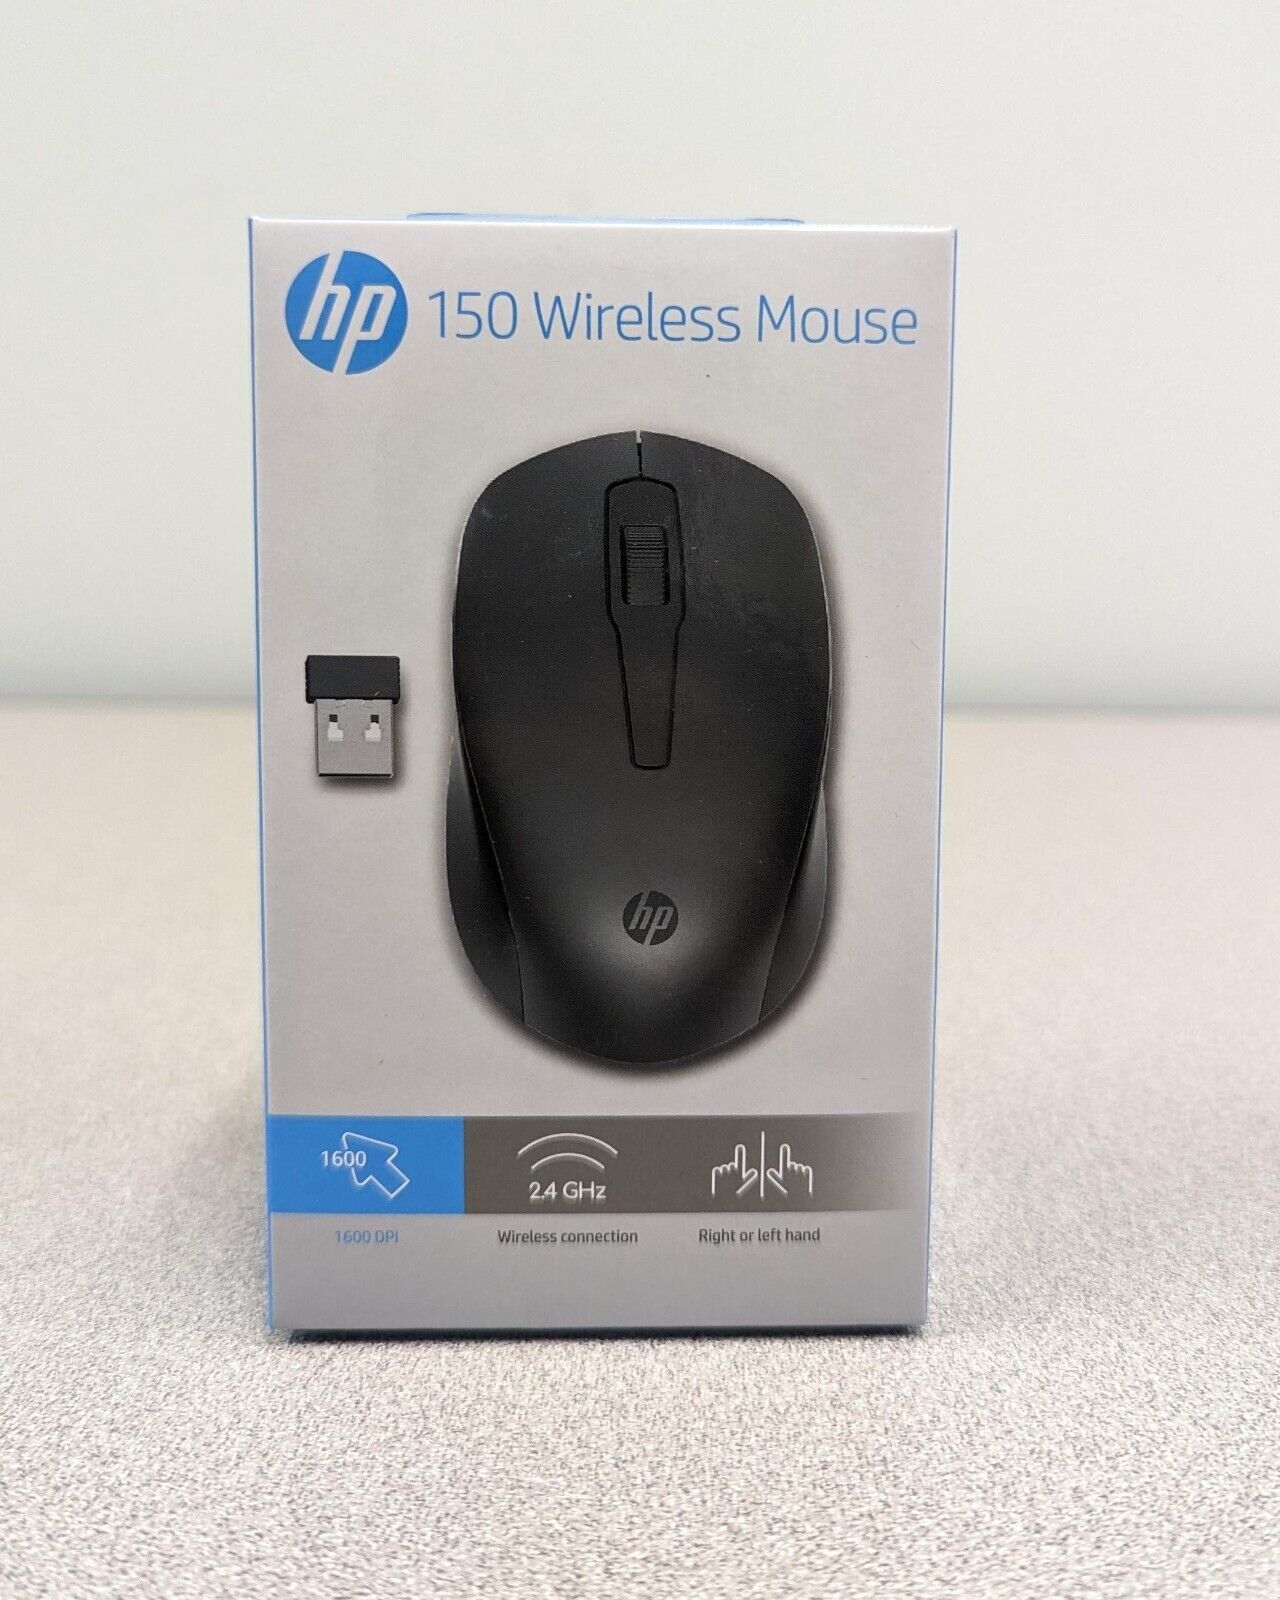 Lot of 50 - HP 150 Wireless USB Mouse Ergonomic Design 1600 DPI Optic 2.4 GHz